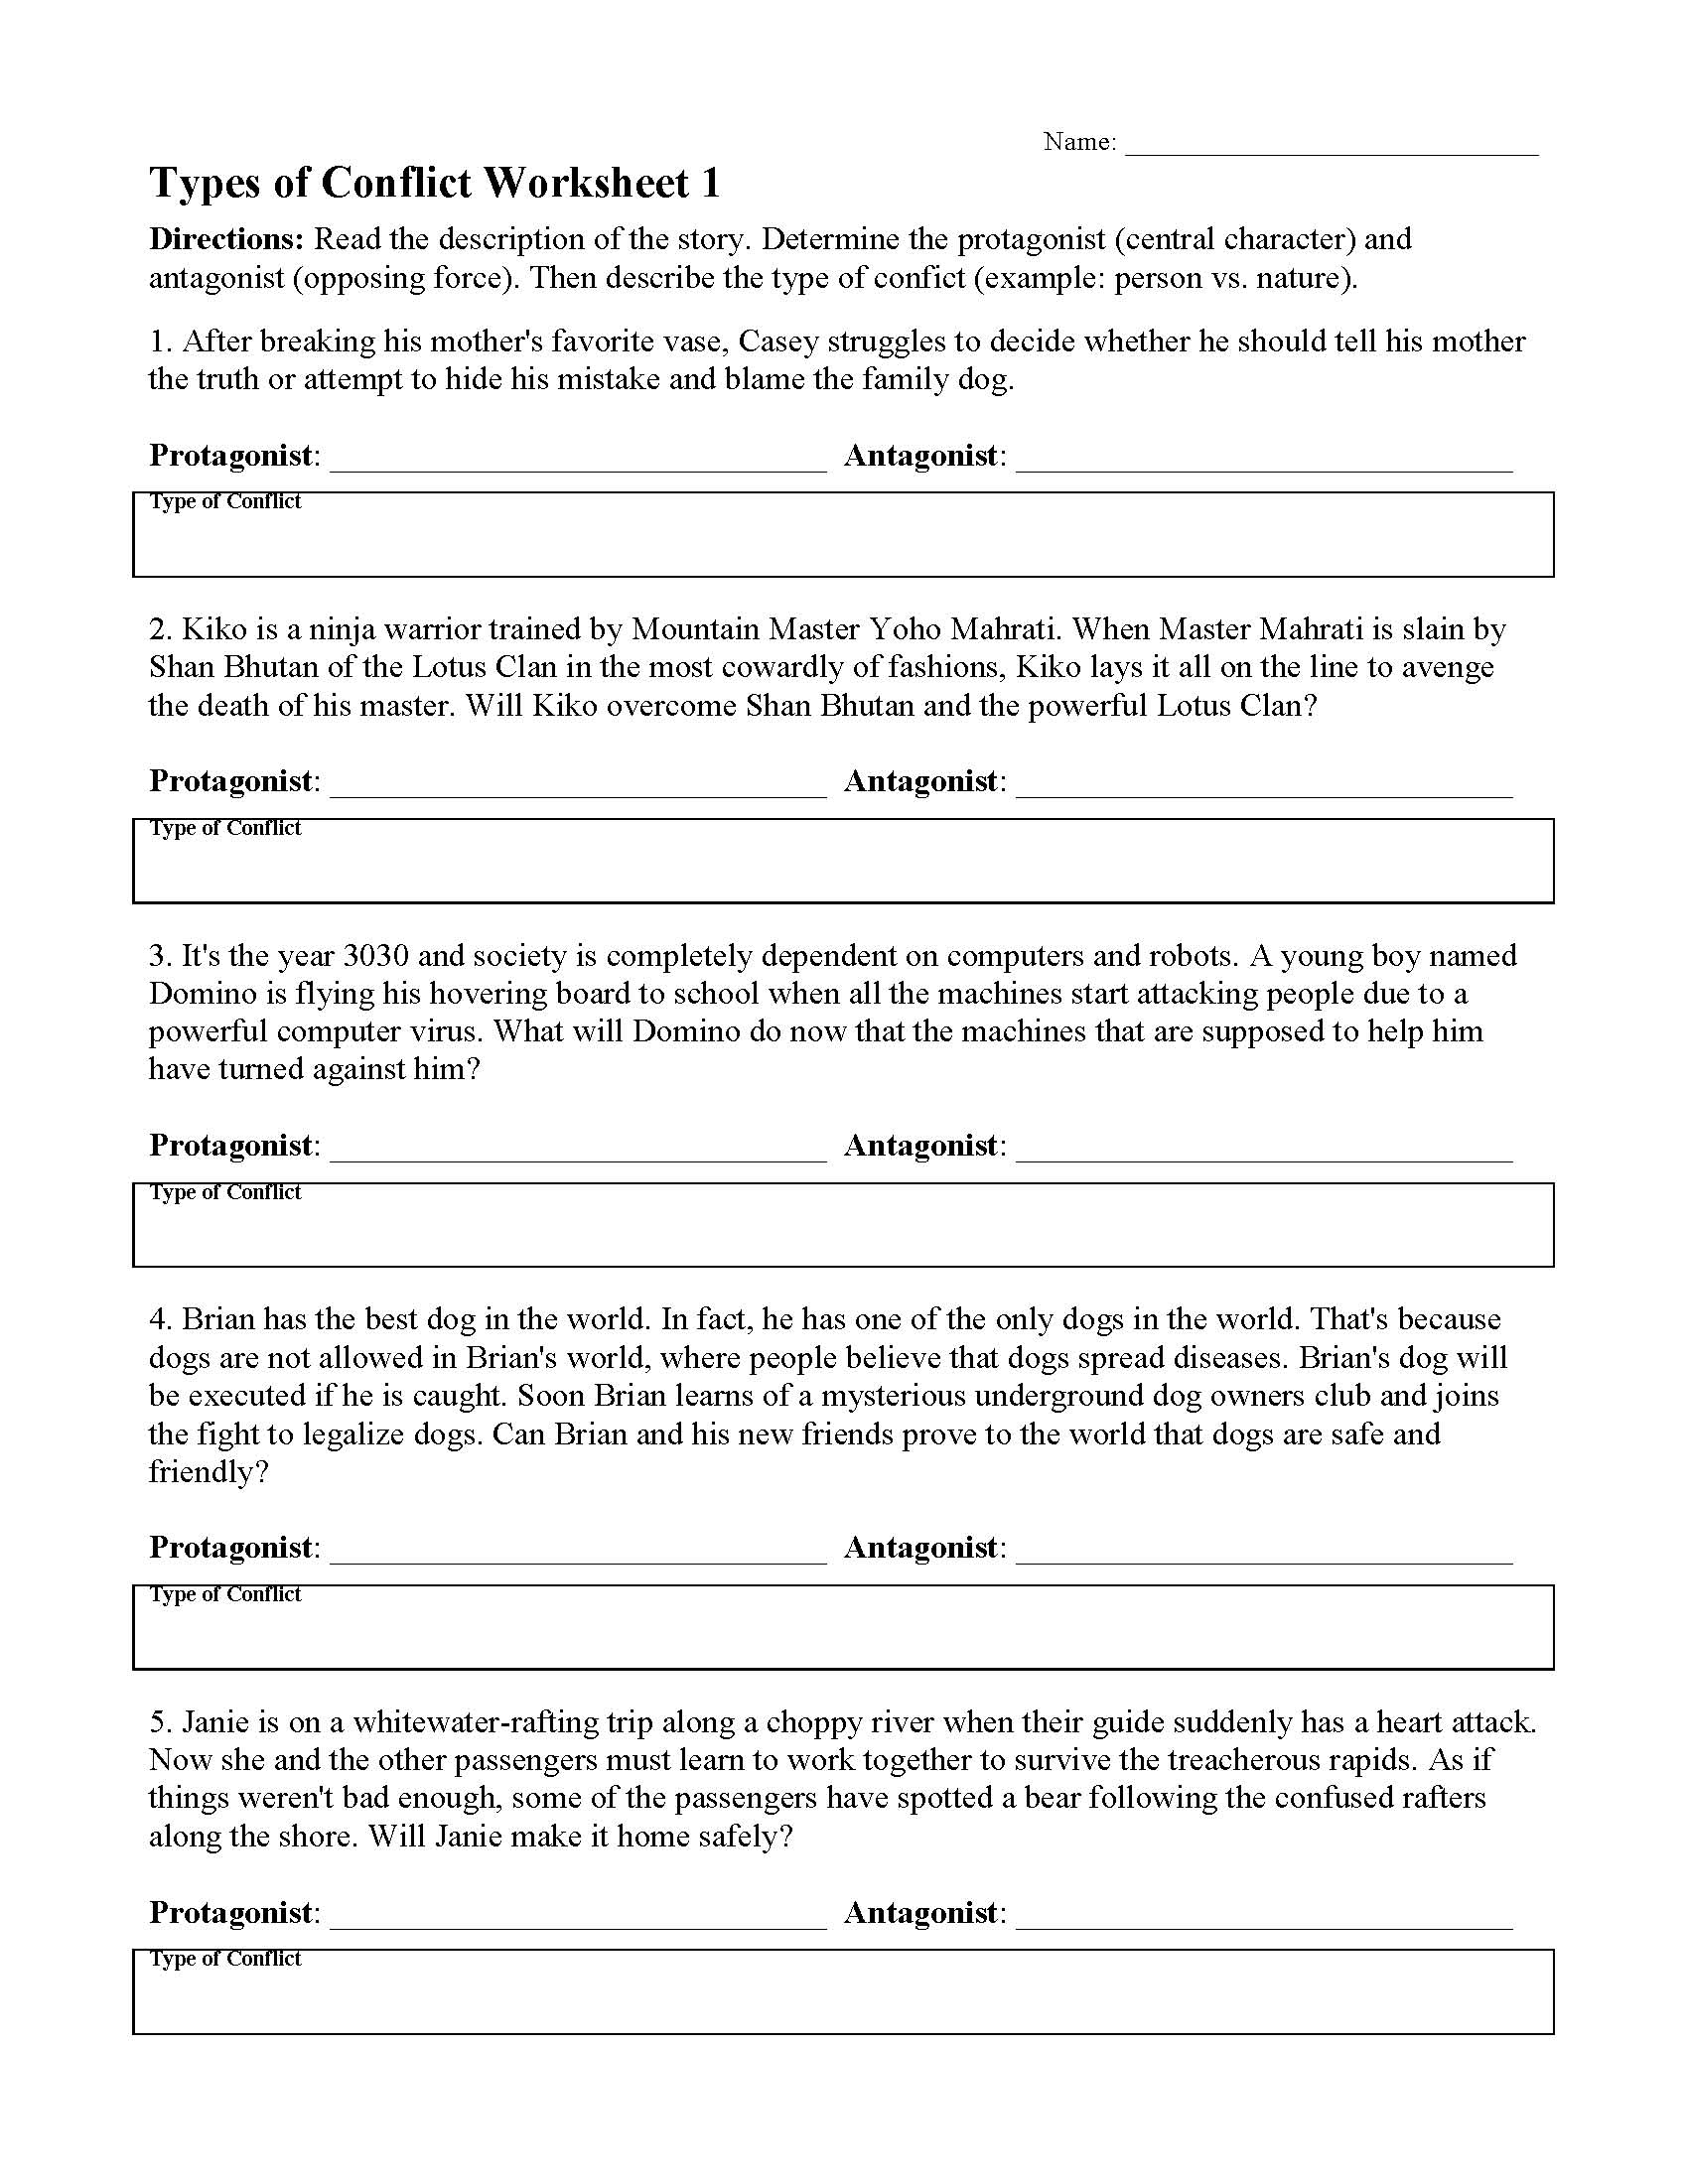 Types of Conflict Worksheet 5   Reading Activity Regarding Protagonist And Antagonist Worksheet